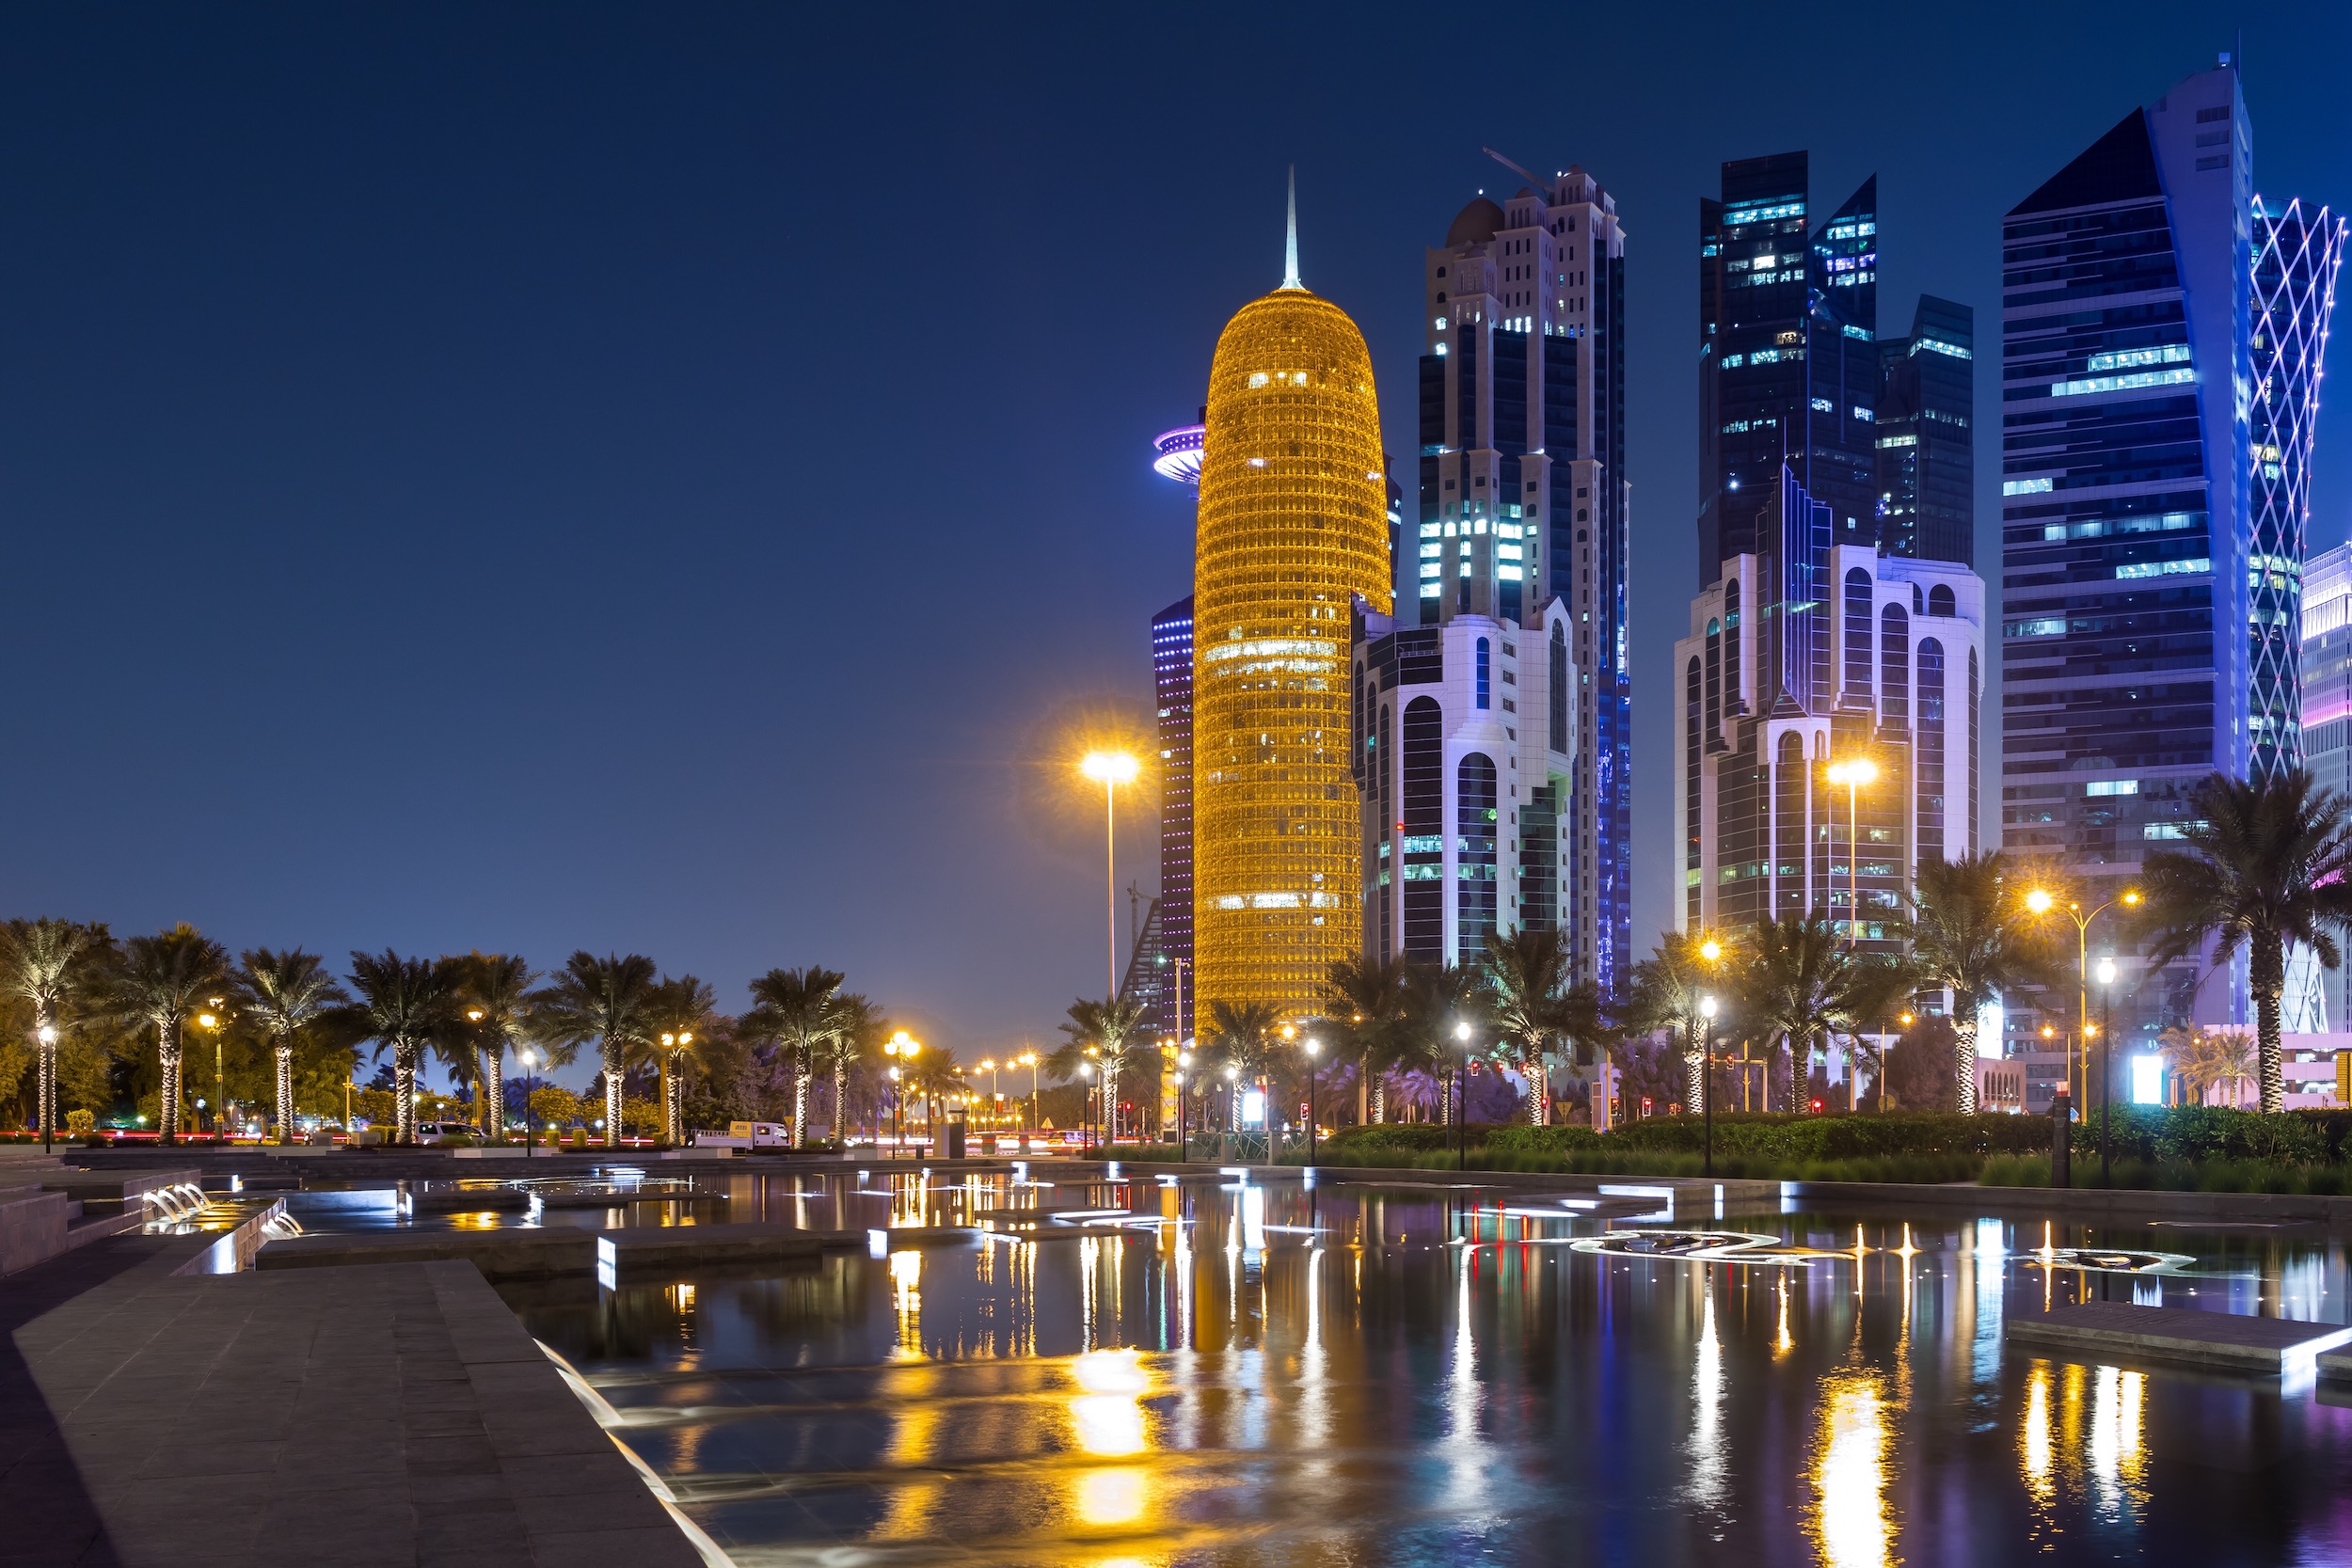 Qatar allocates QR72.1 billion in 2021 budget for major projects